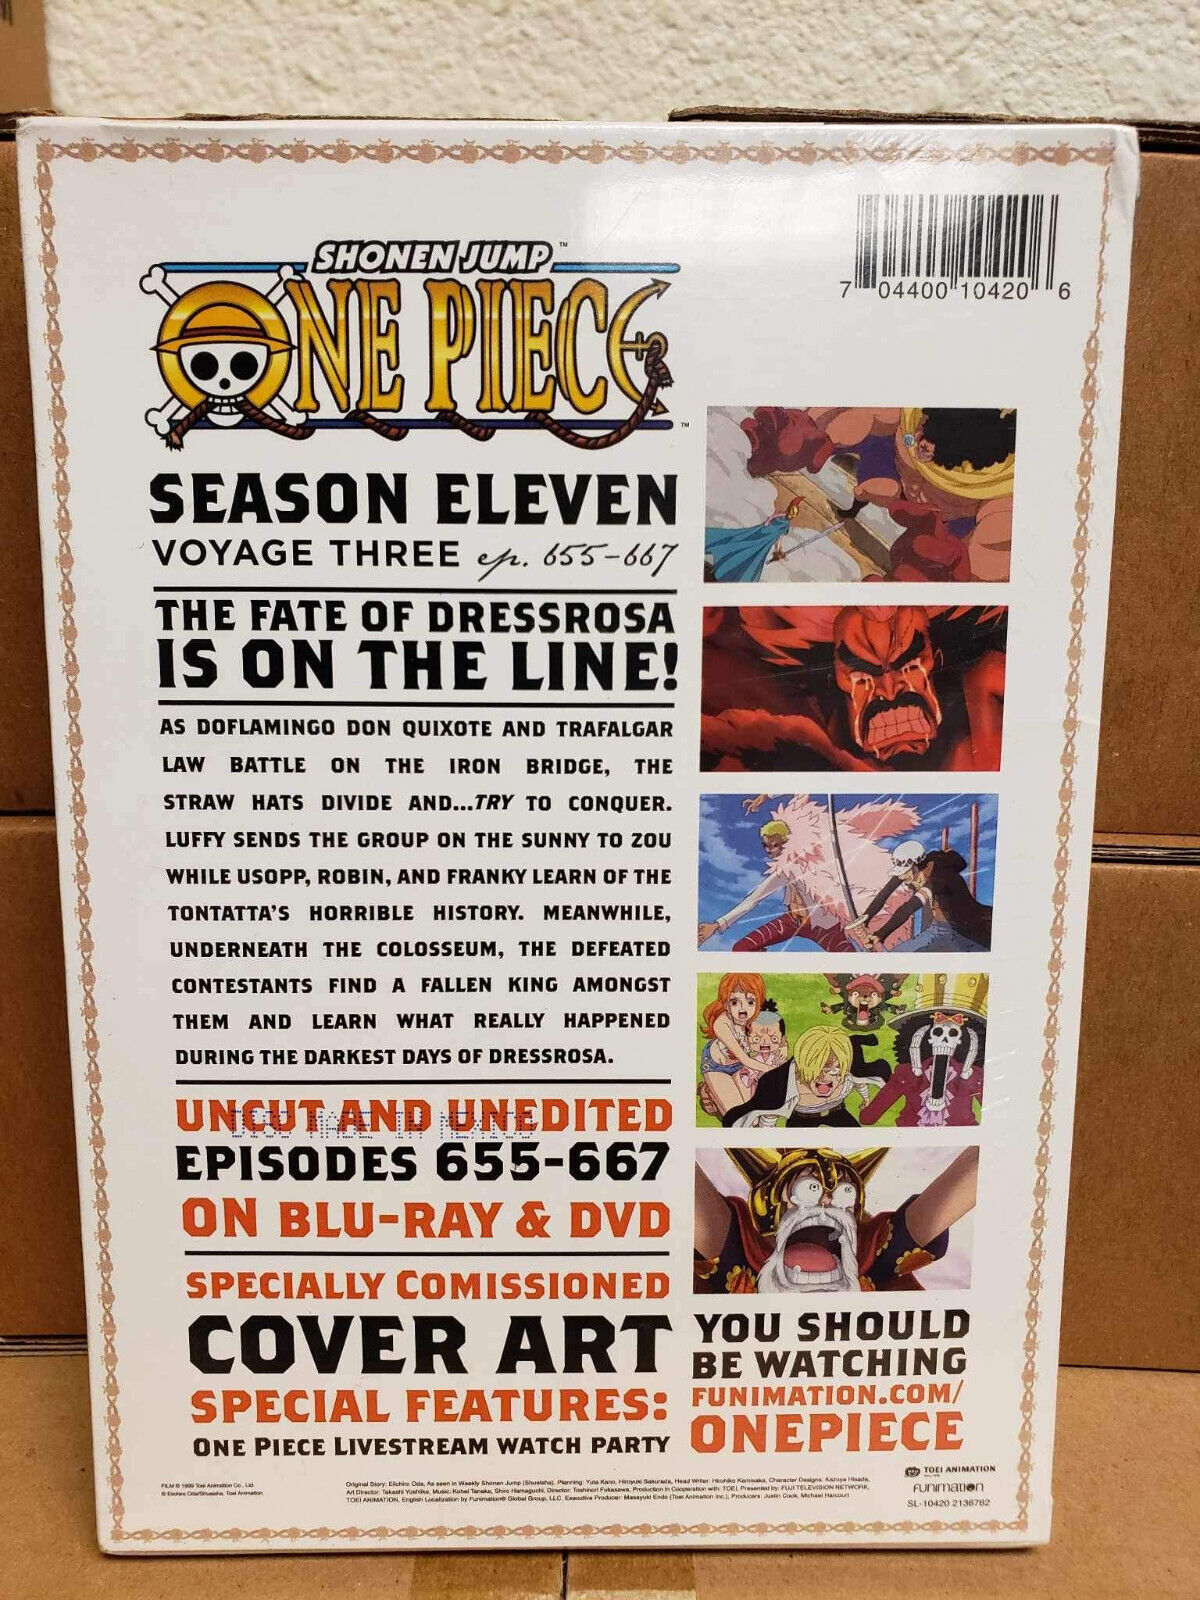 One Piece Season 11 Series Eleven Eleventh Voyage 3 New Blu-ray + DVD